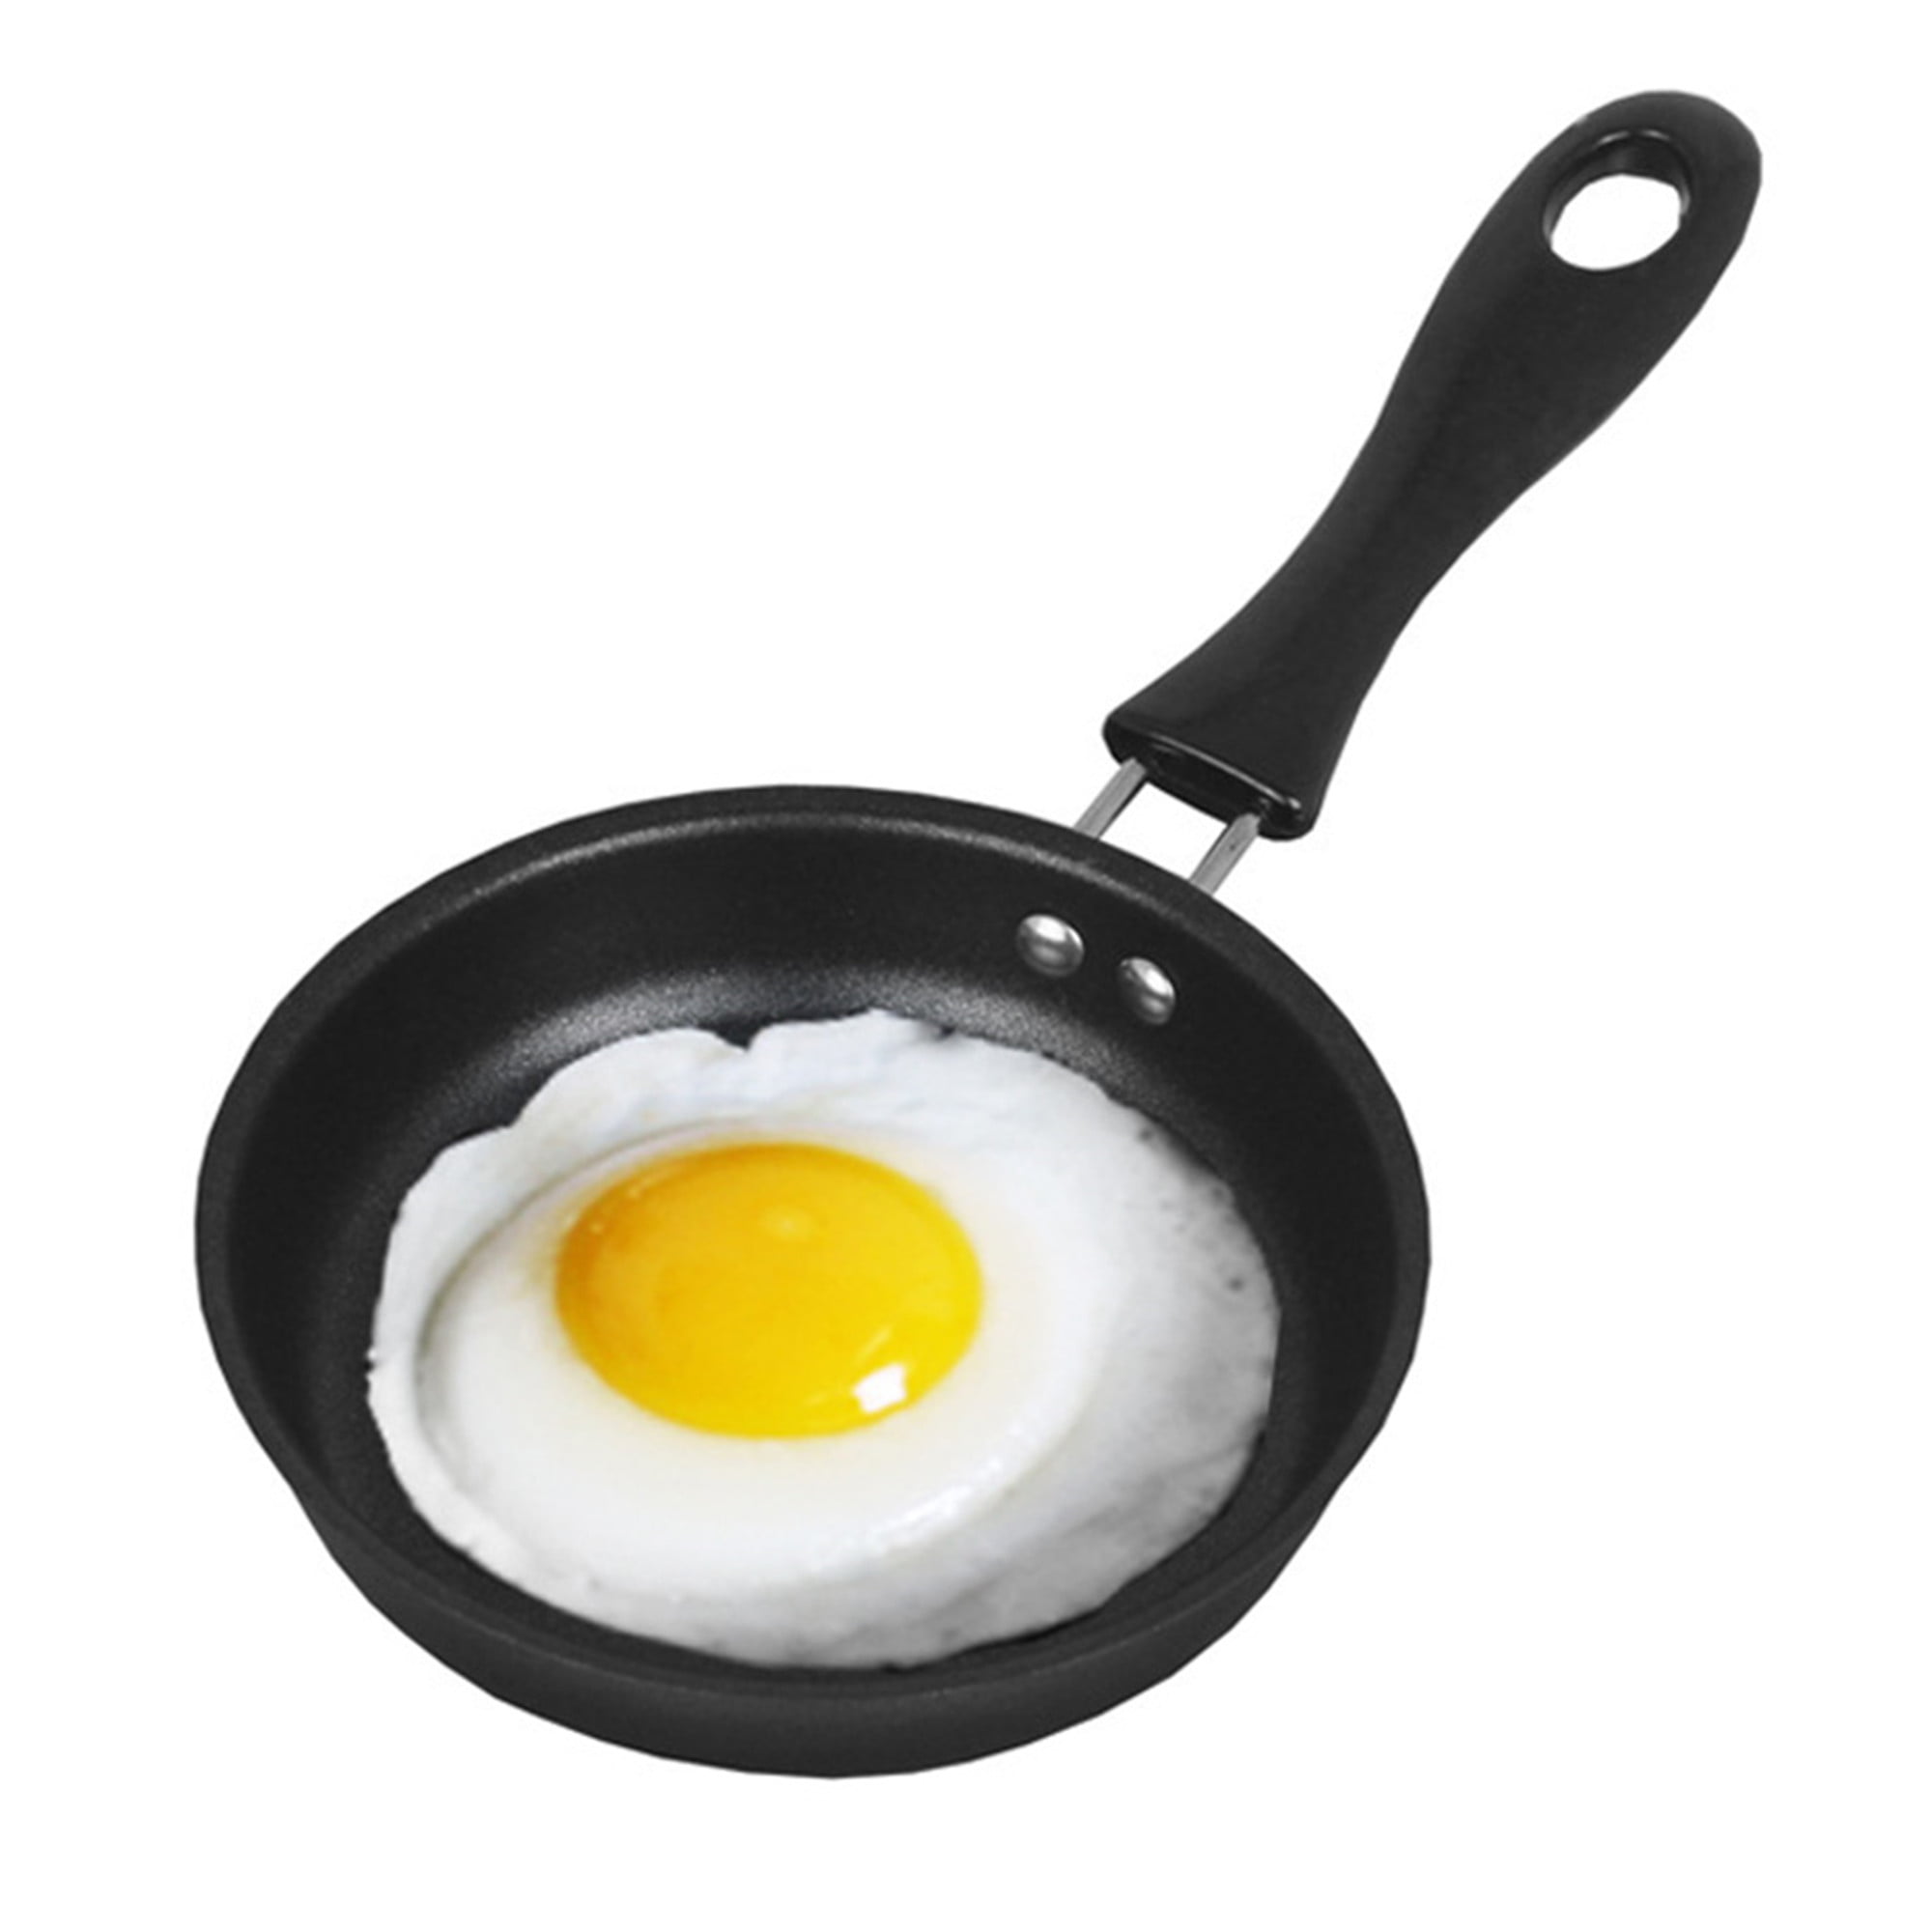 1PC Mini Frying Pan Fried Eggs Saucepan Cookware for Baking Cooking Breakfast 